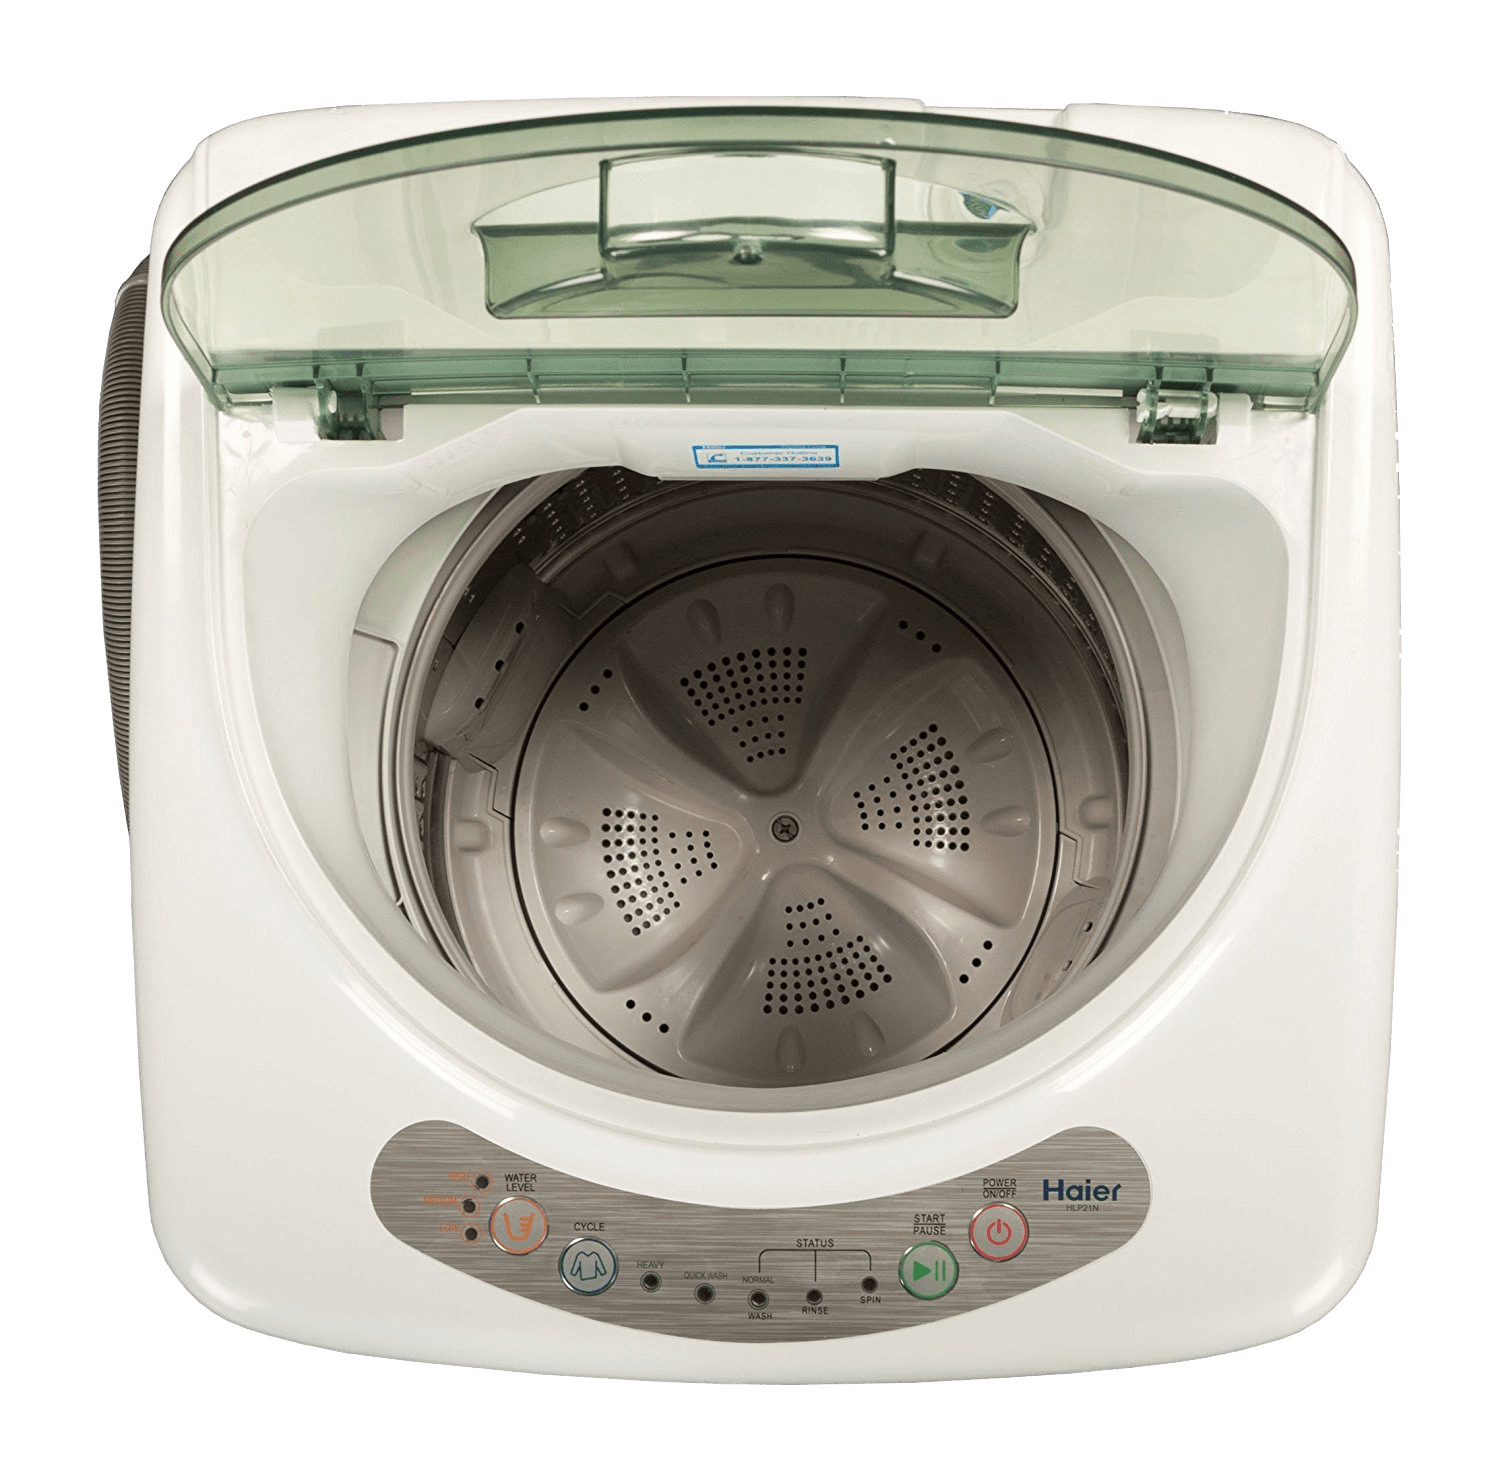 Haier Portable Washing Machine icons